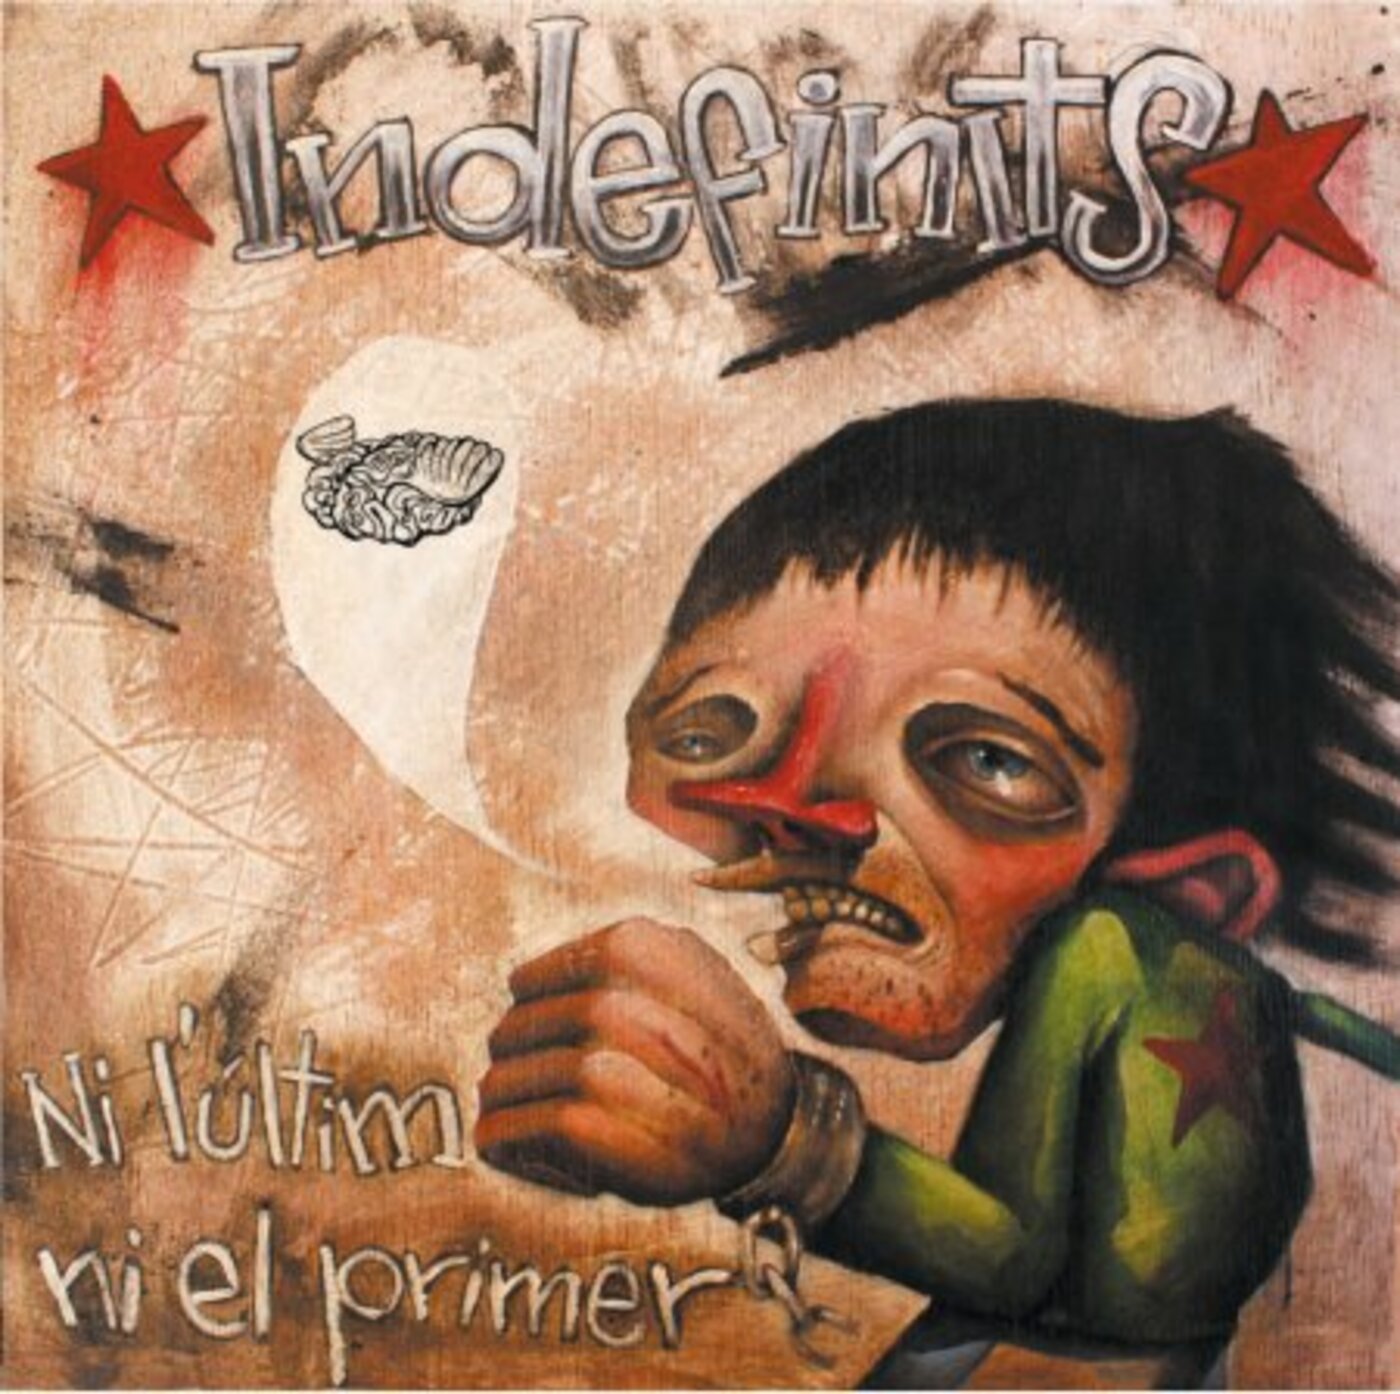 Indefinits - Ni l'últim ni el primer | musica en valencià